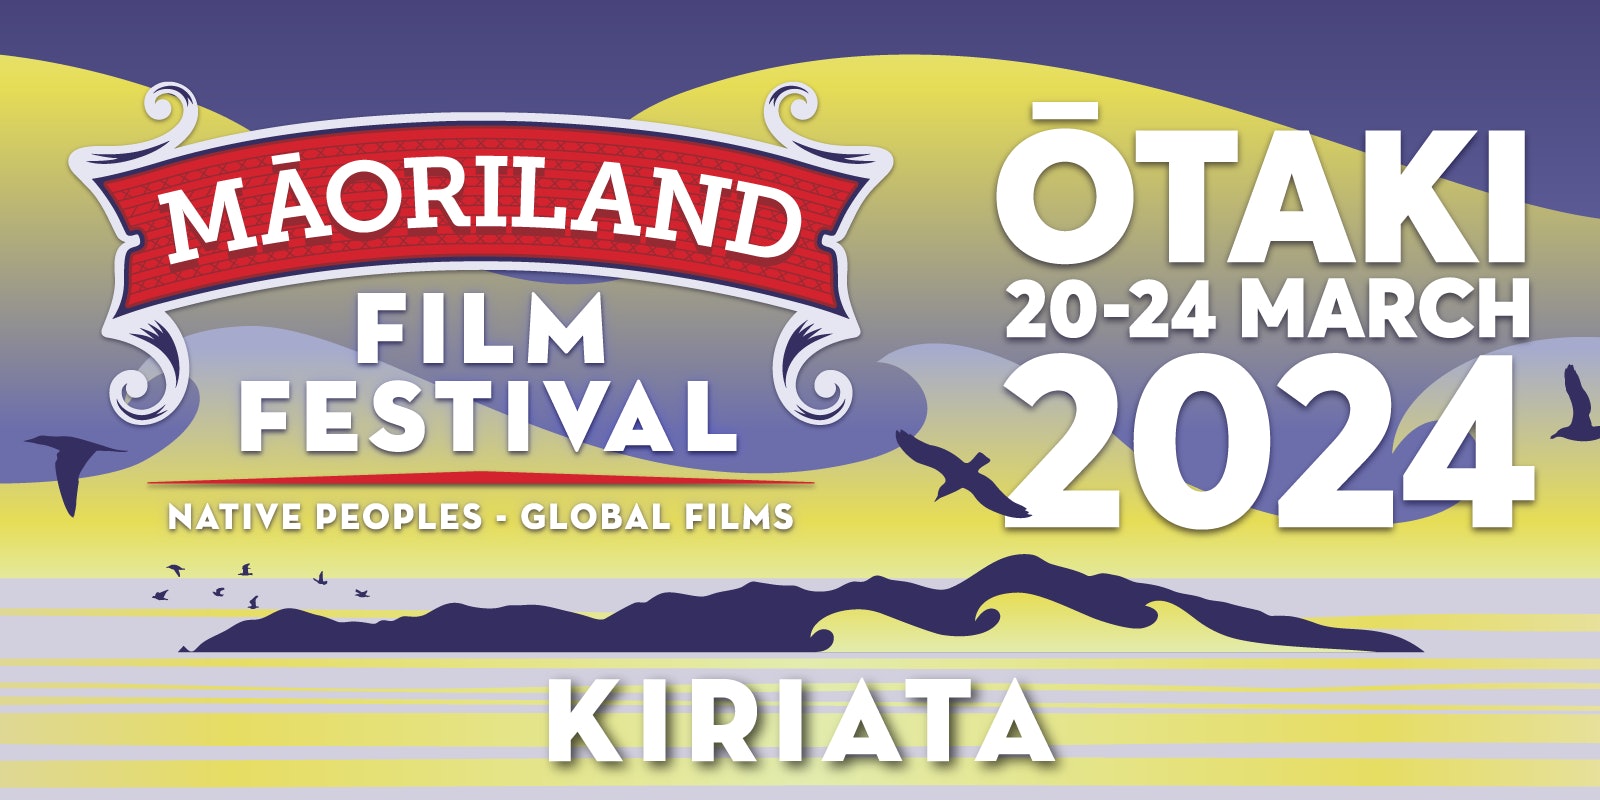 MAORILAND FILM FESTIVAL 2024 | Kiriata